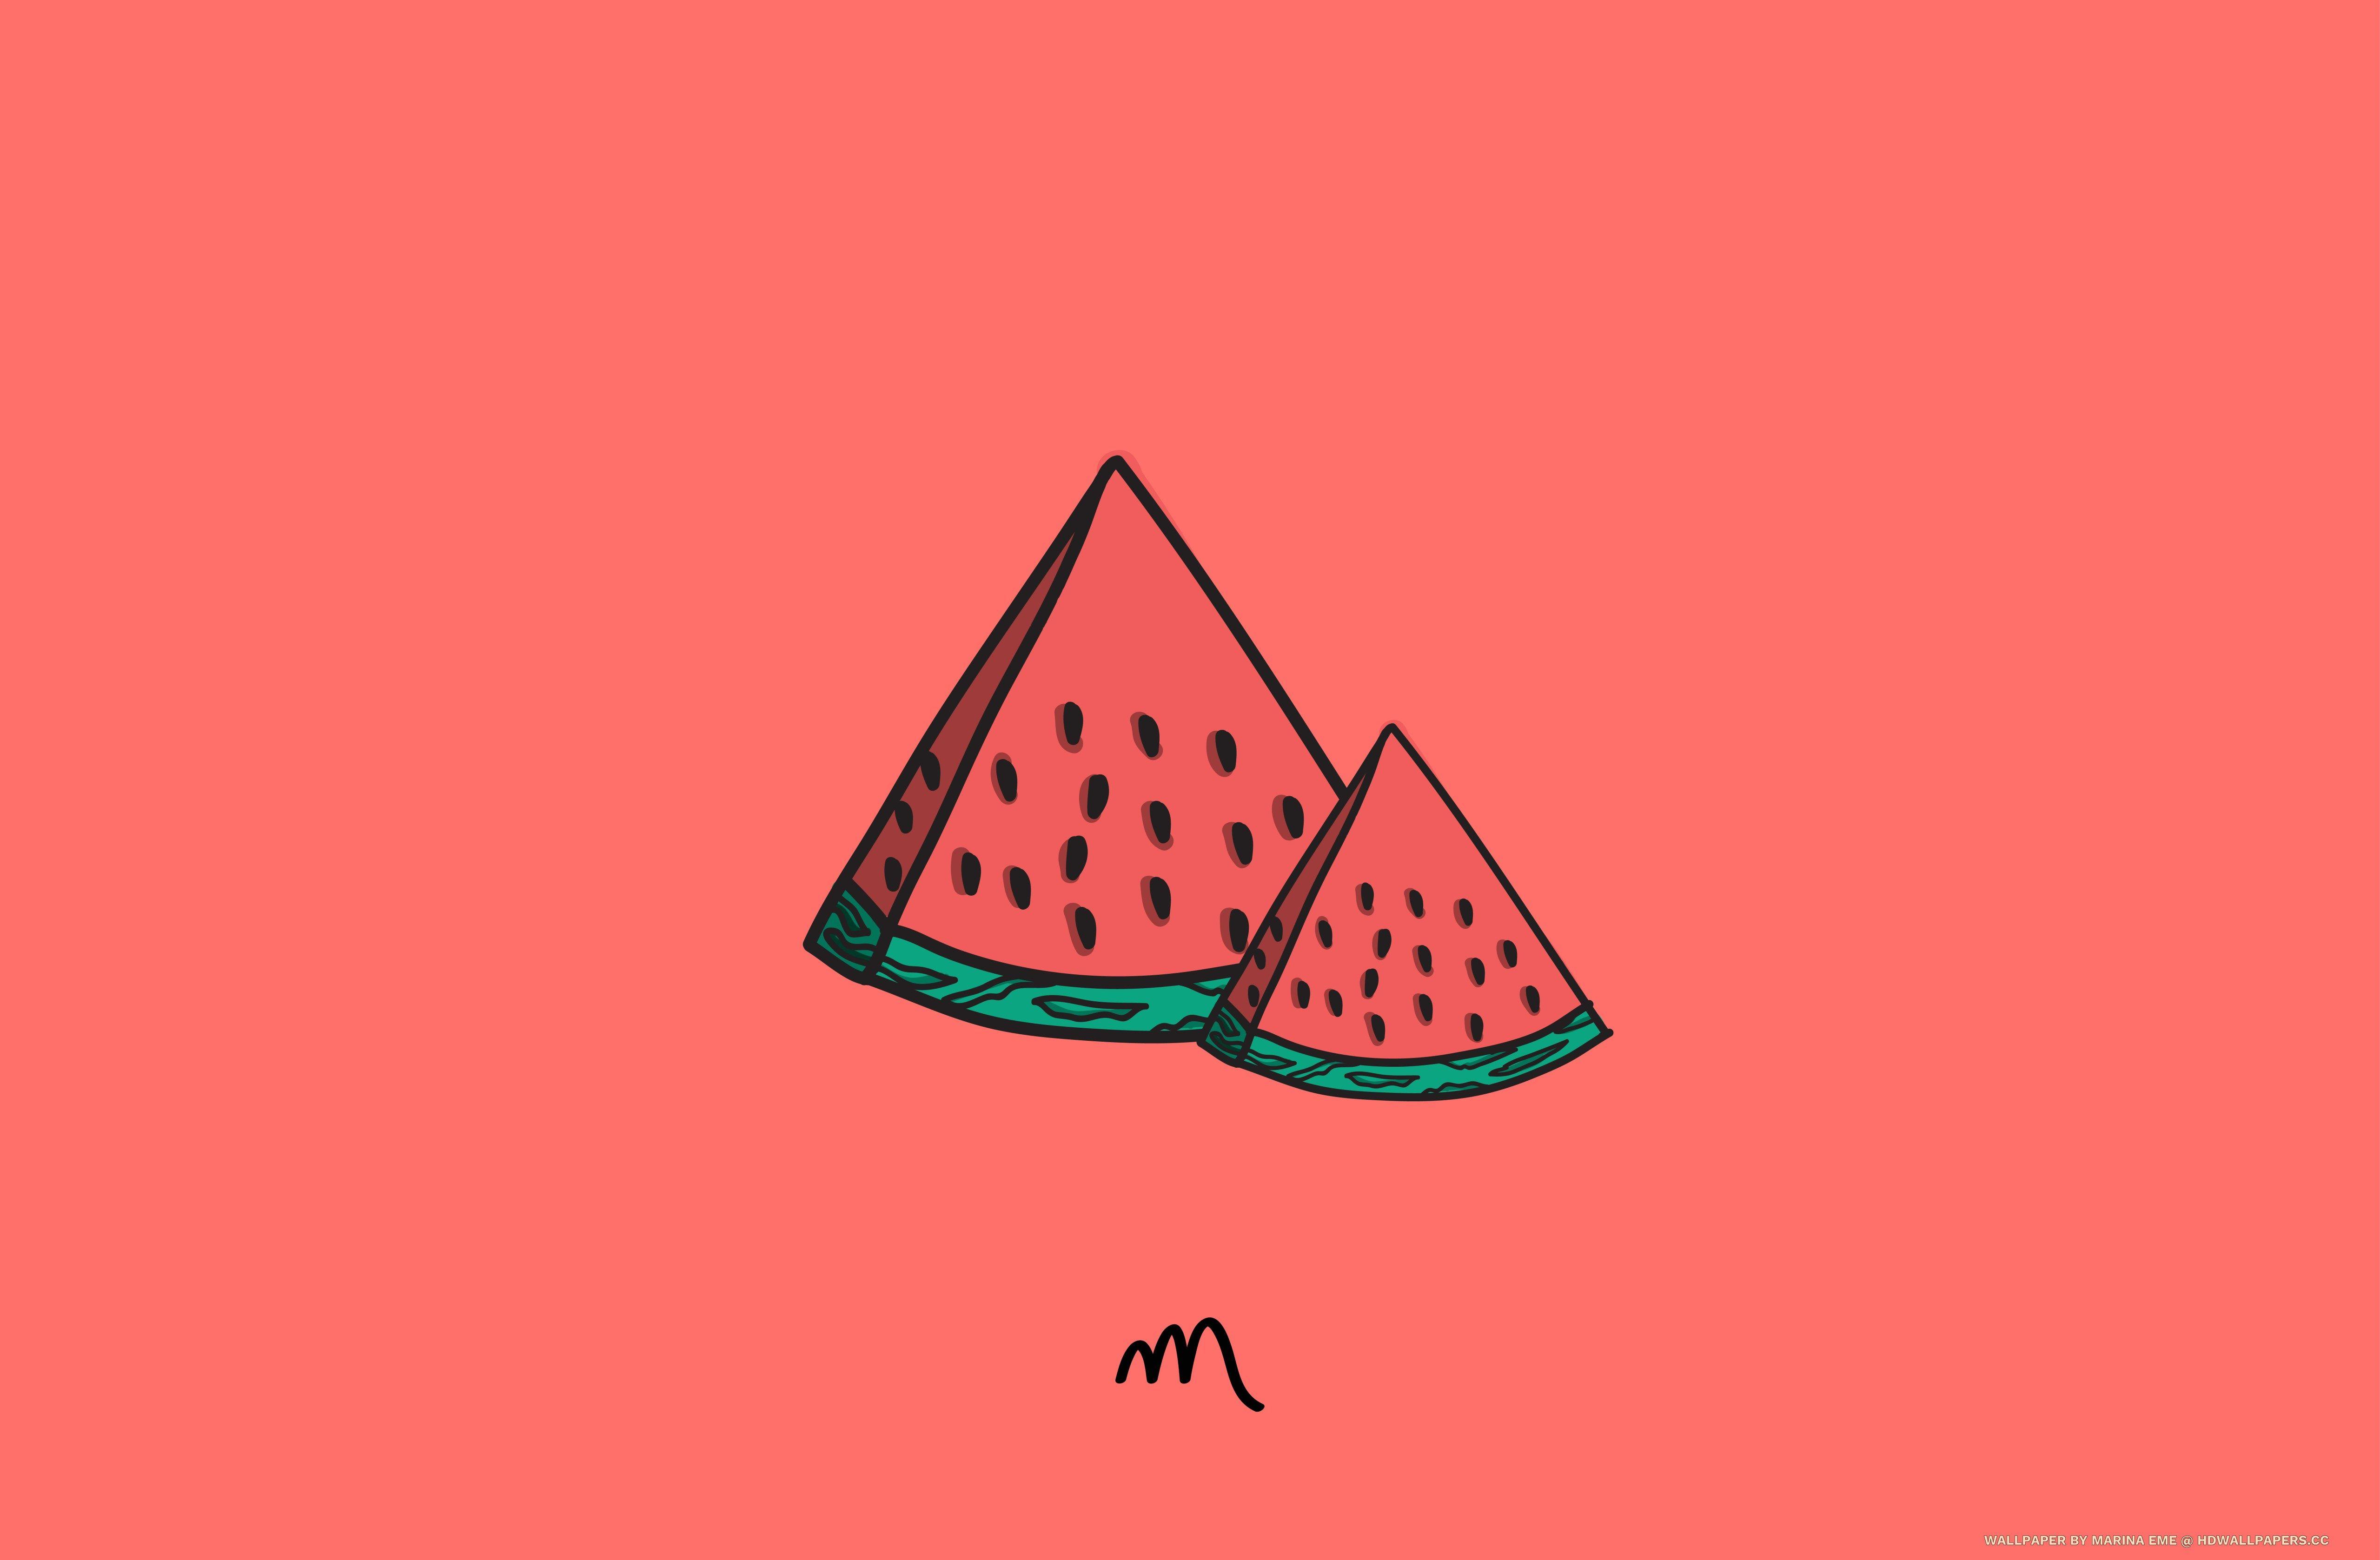 Eme's watermelon